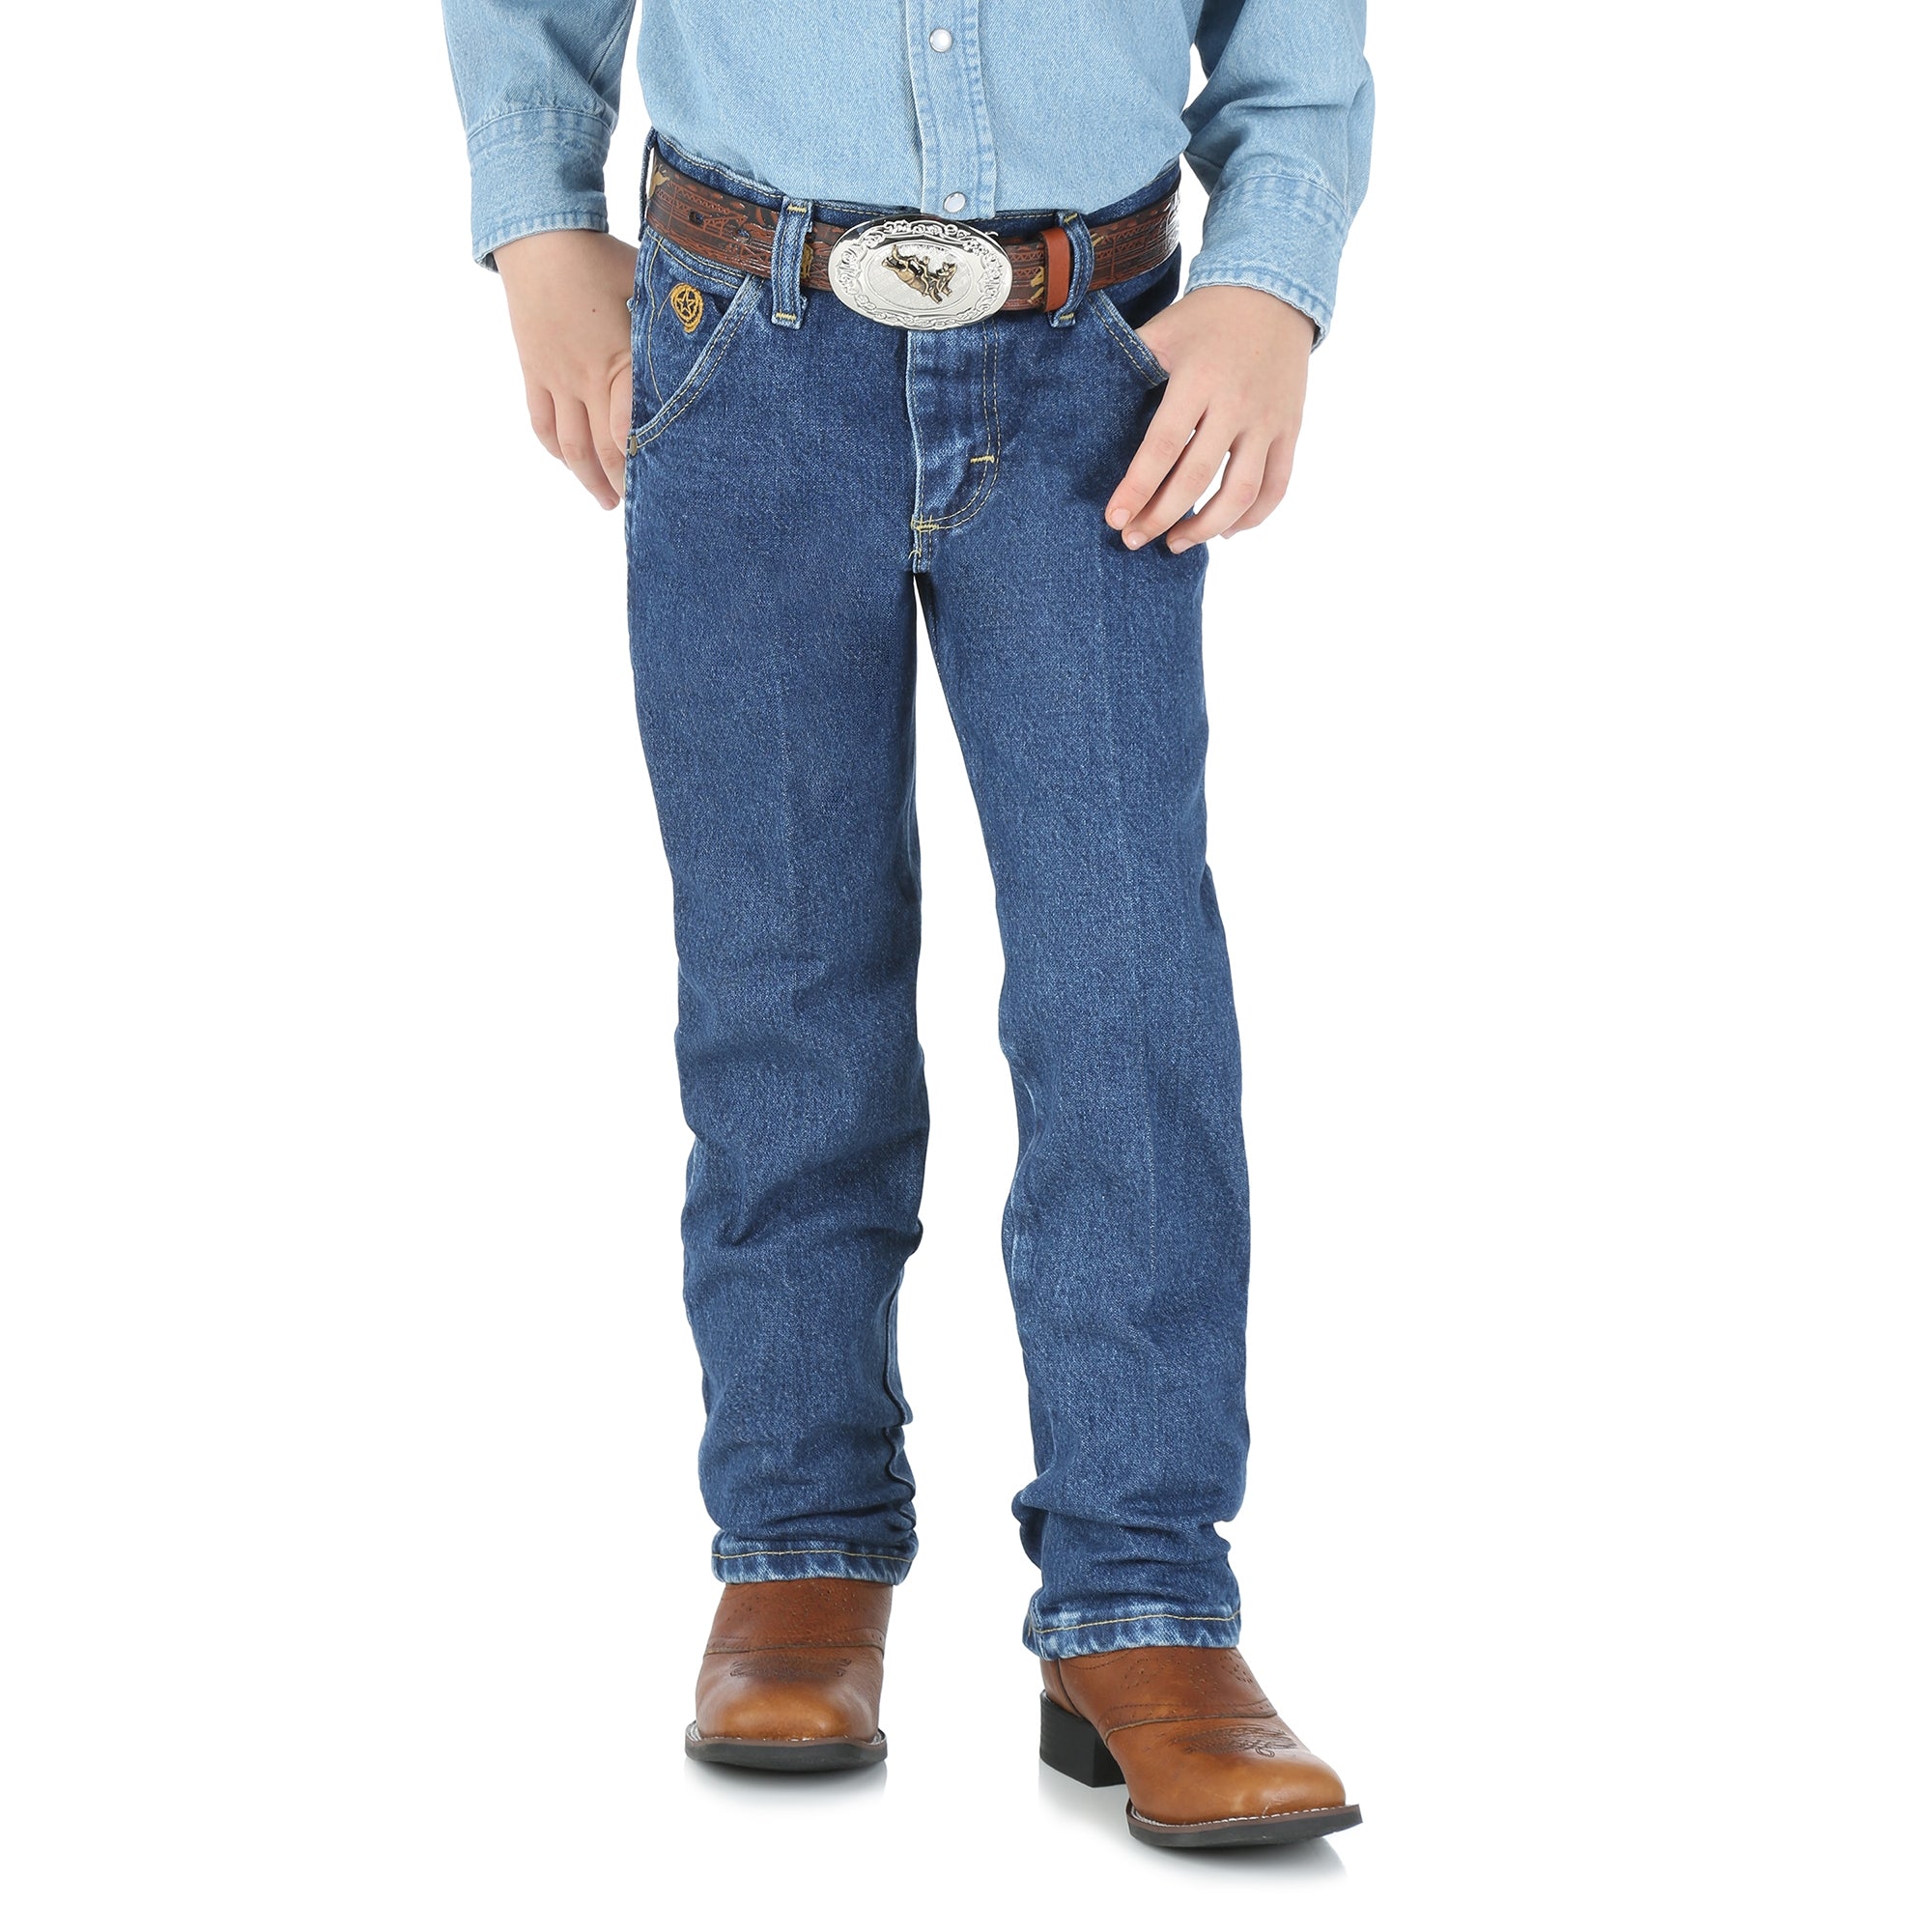 Wrangler Boy's George Strait Cowboy Cut Jeans STYLE 13JGSHD